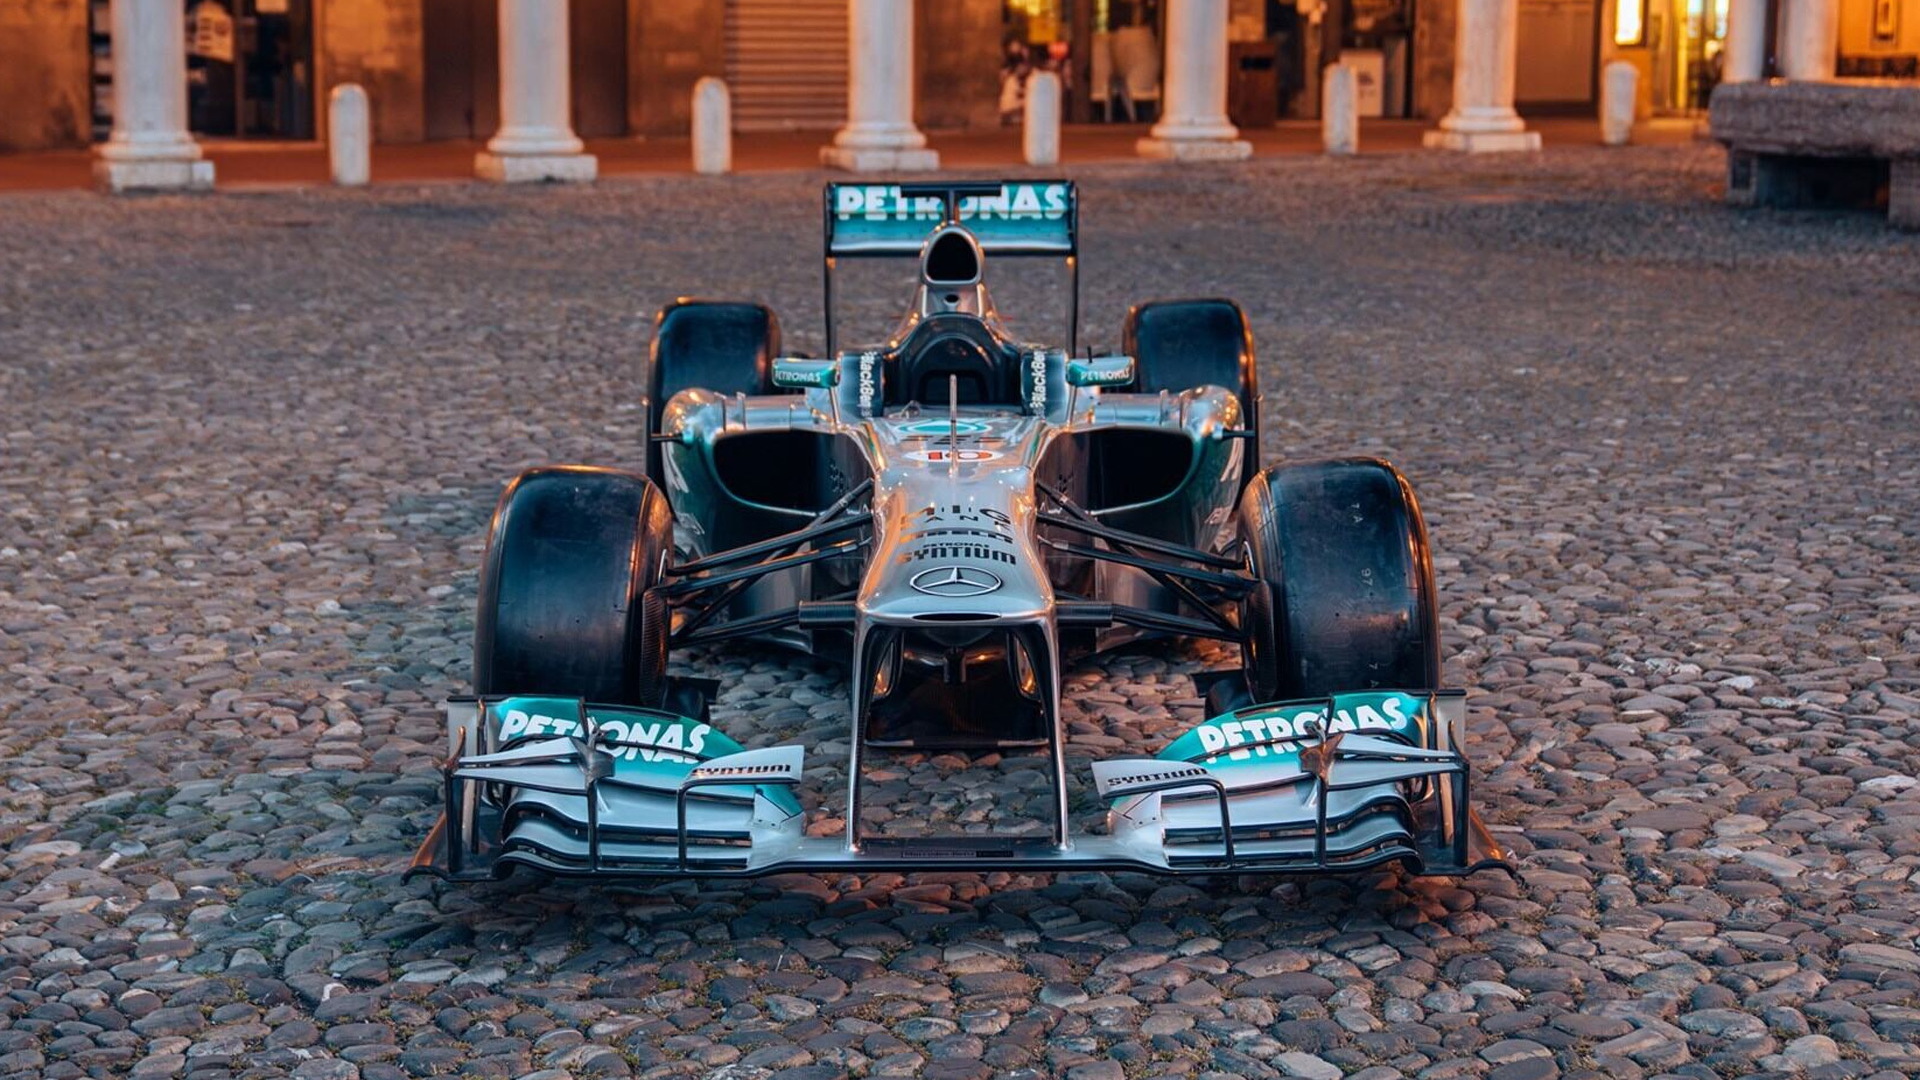 2013 Mercedes-Benz AMG W04 Formula 1 car driven by Lewis Hamilton - Photo credit: RM Sotheby's